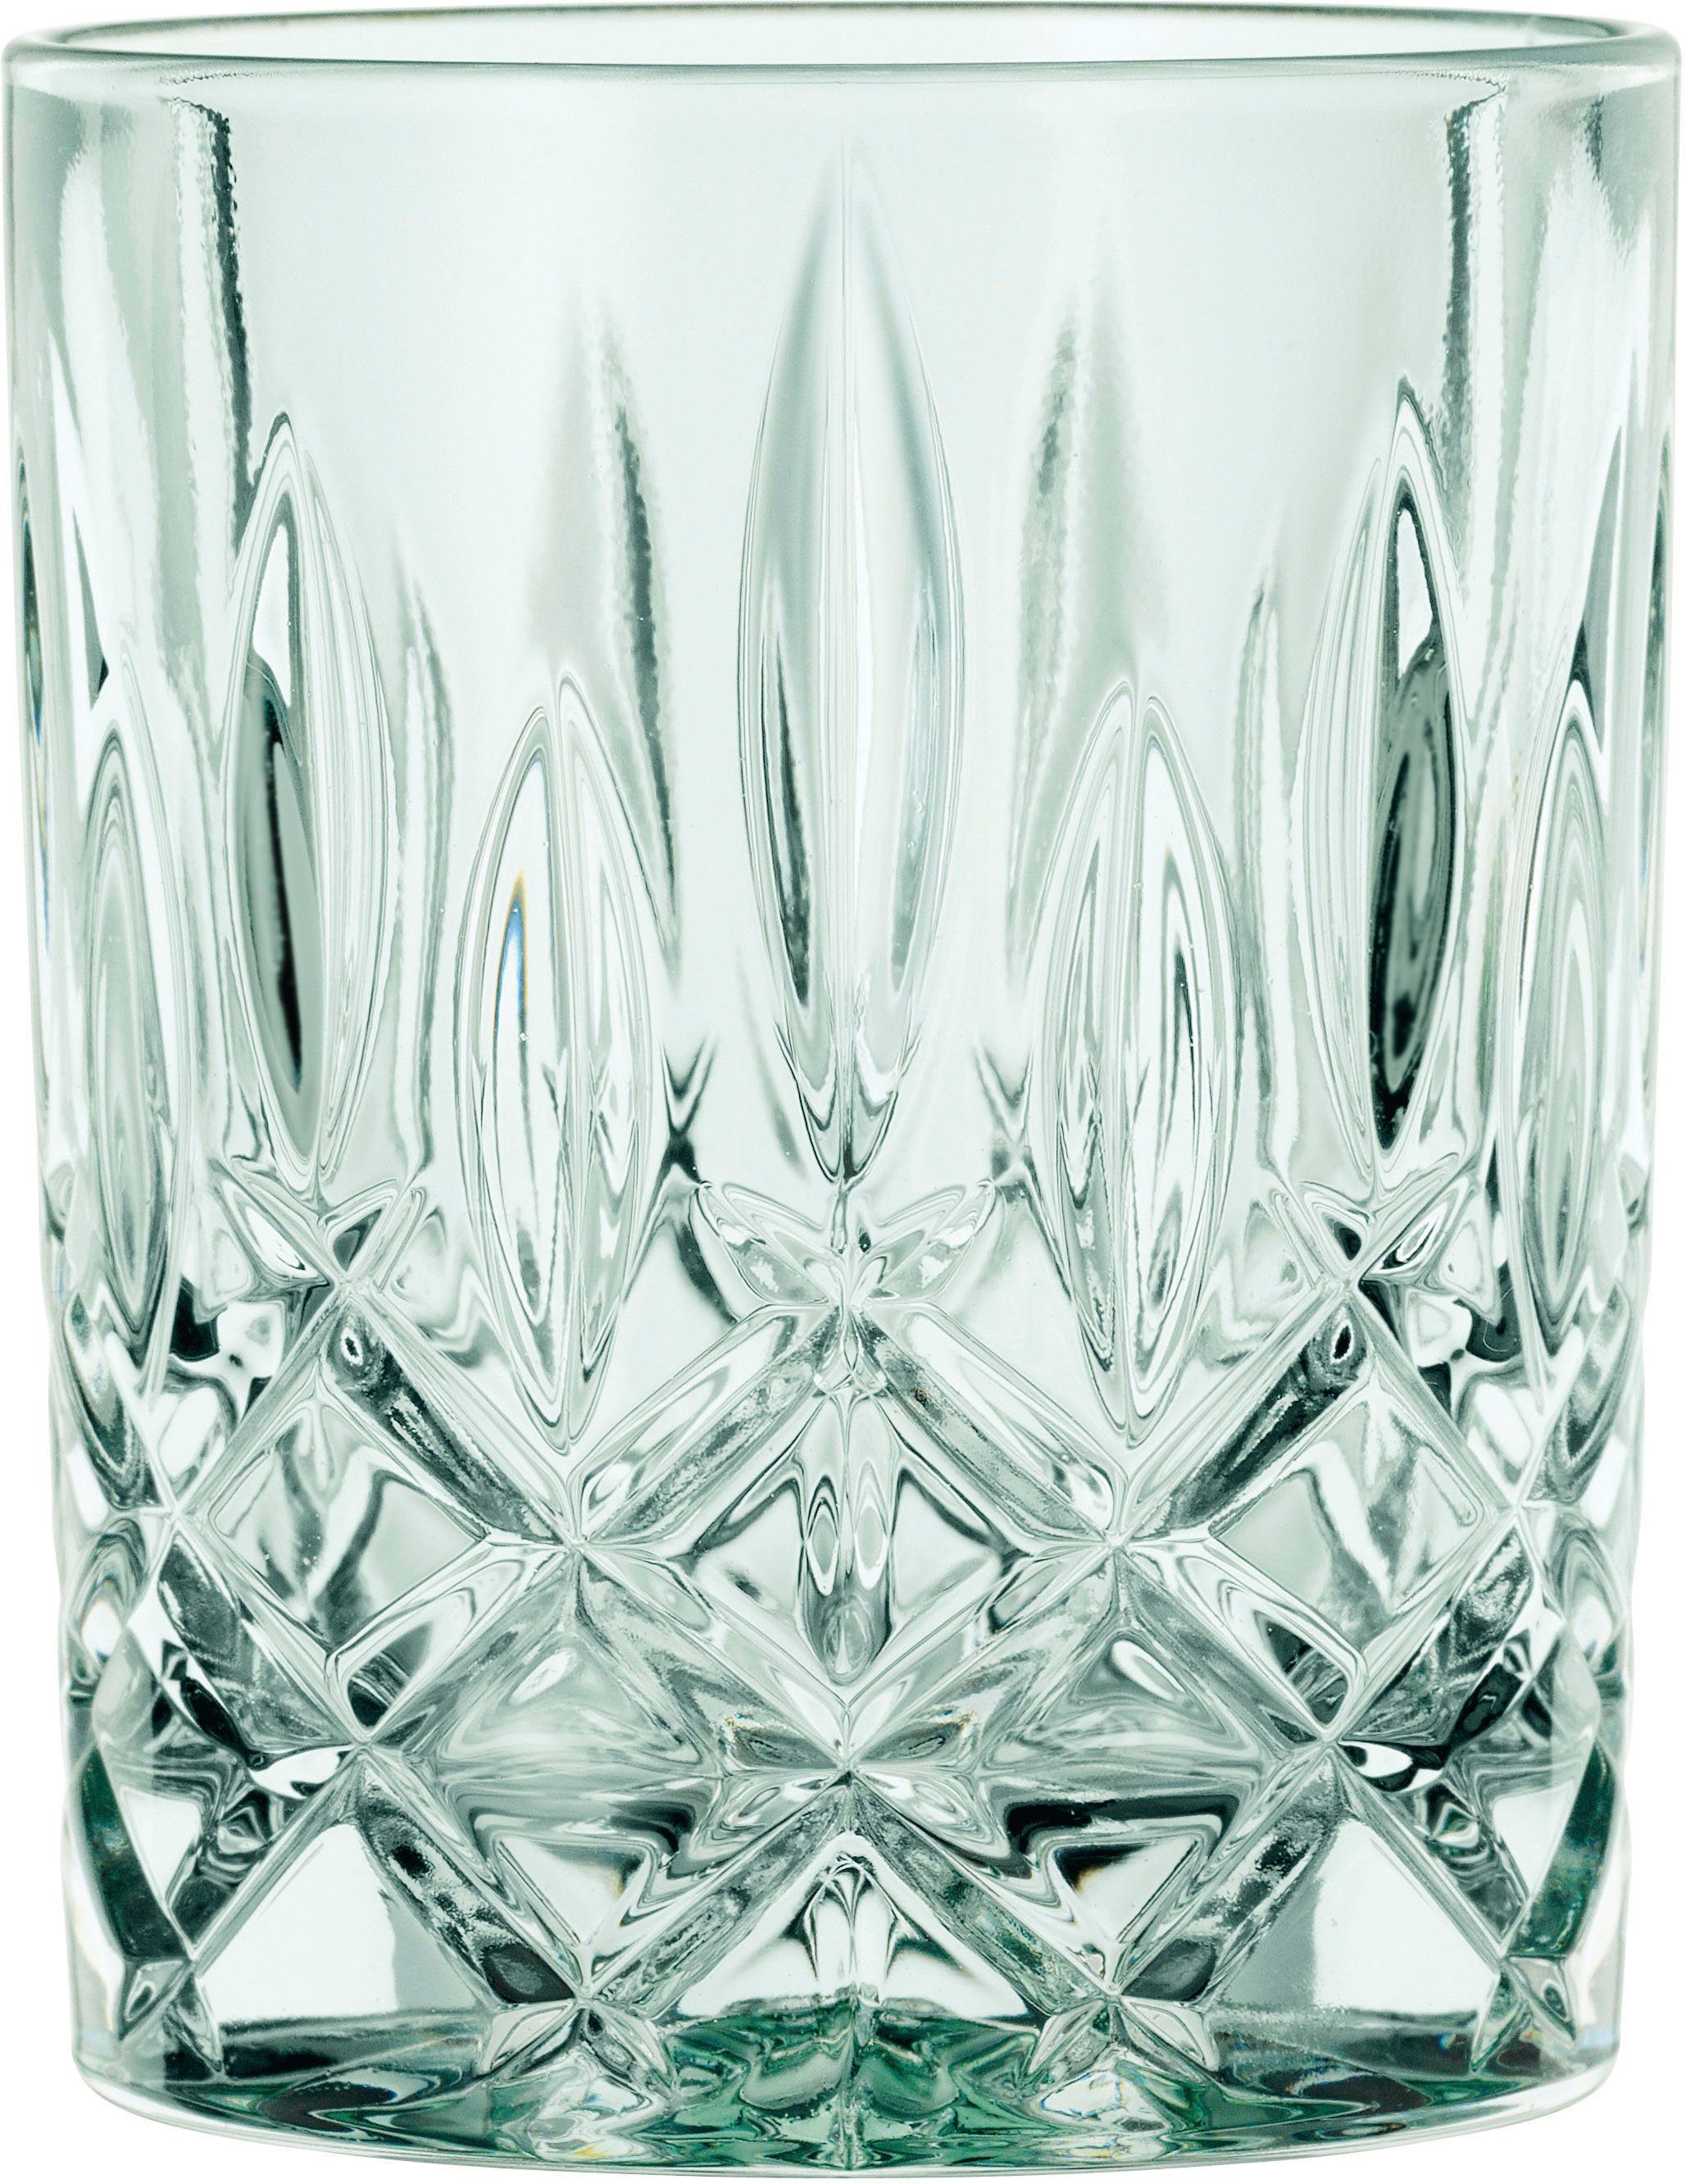 Nachtmann Whiskyglas Noblesse, Kristallglas, Made in Germany, 295 ml, 2-teilig mint